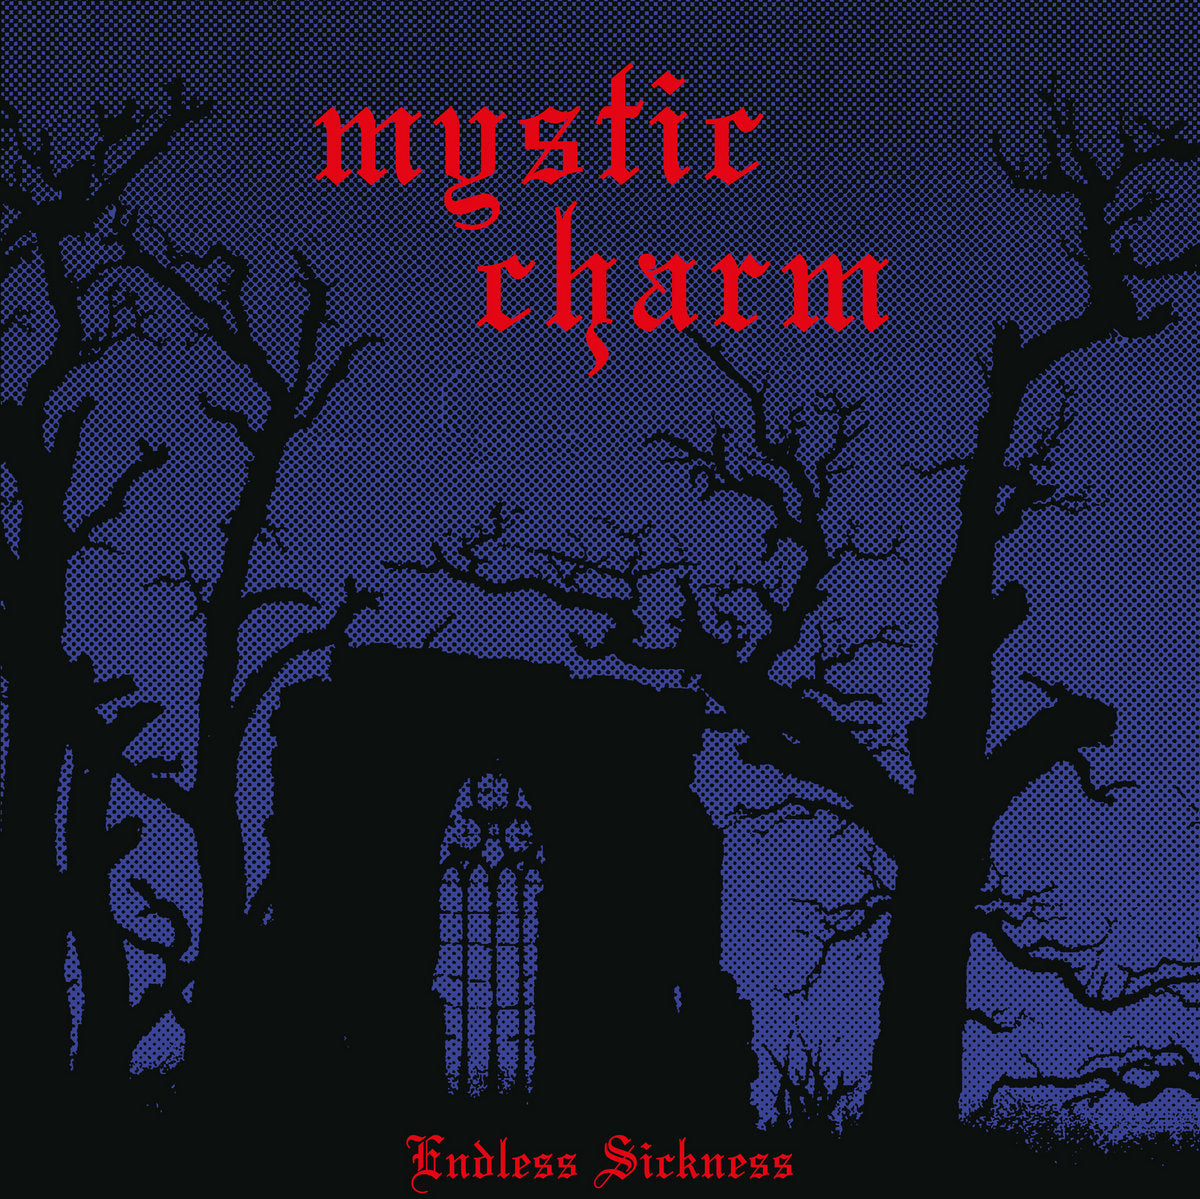 Mystic Charm - "Endless Sickness" LP